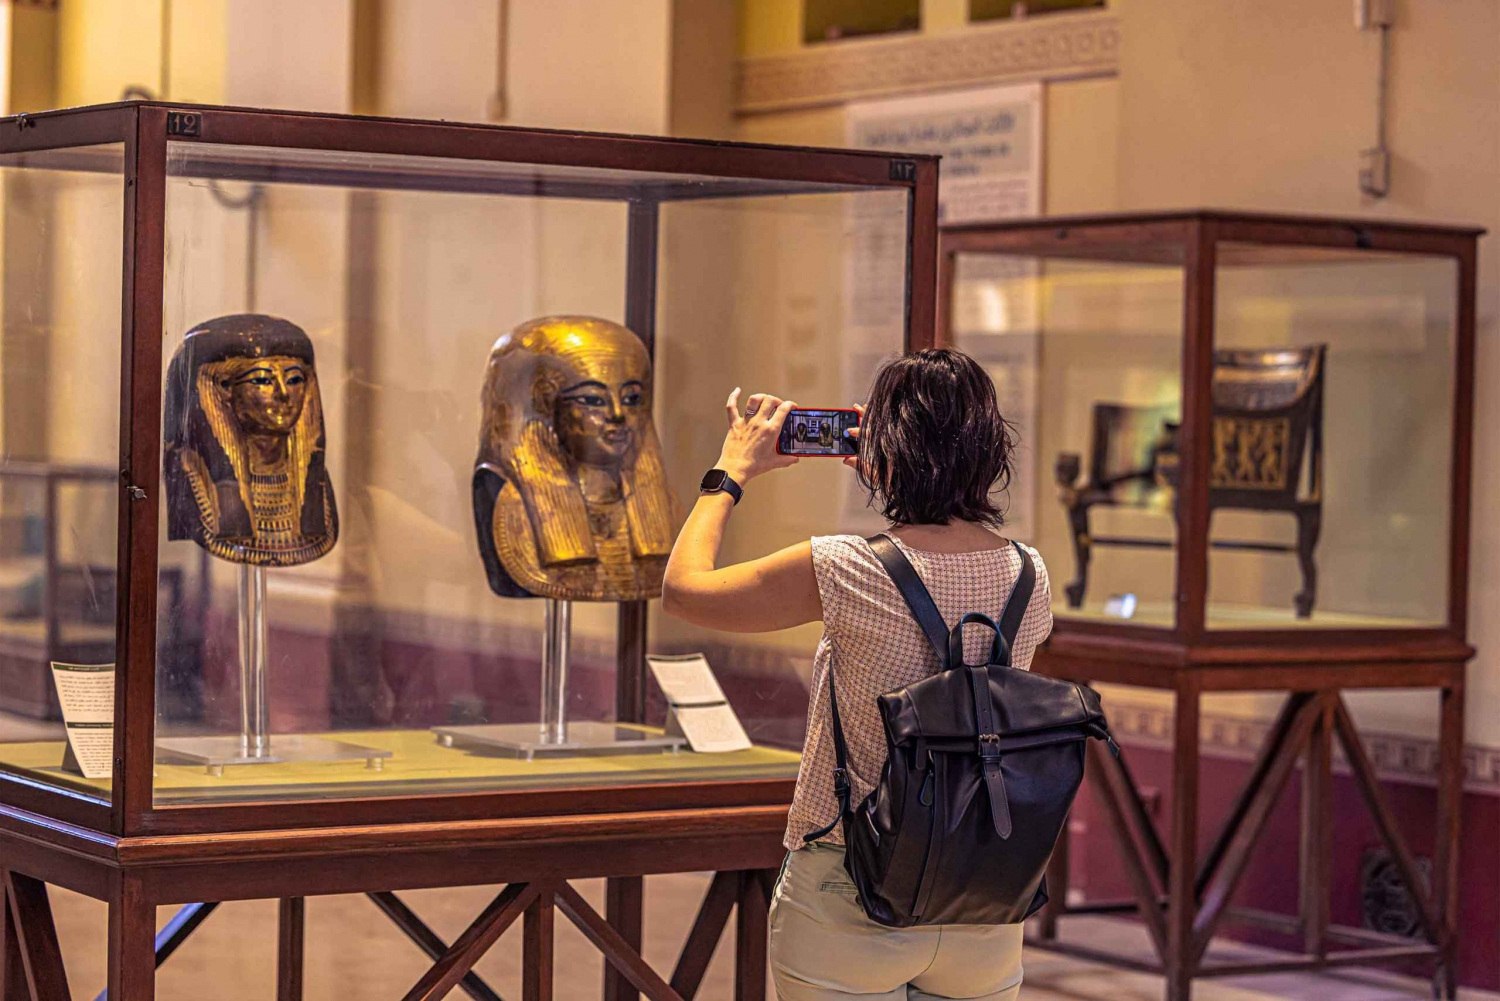 Hurghada: Full-Day Cairo, Giza Pyramids & Museum Guided Tour